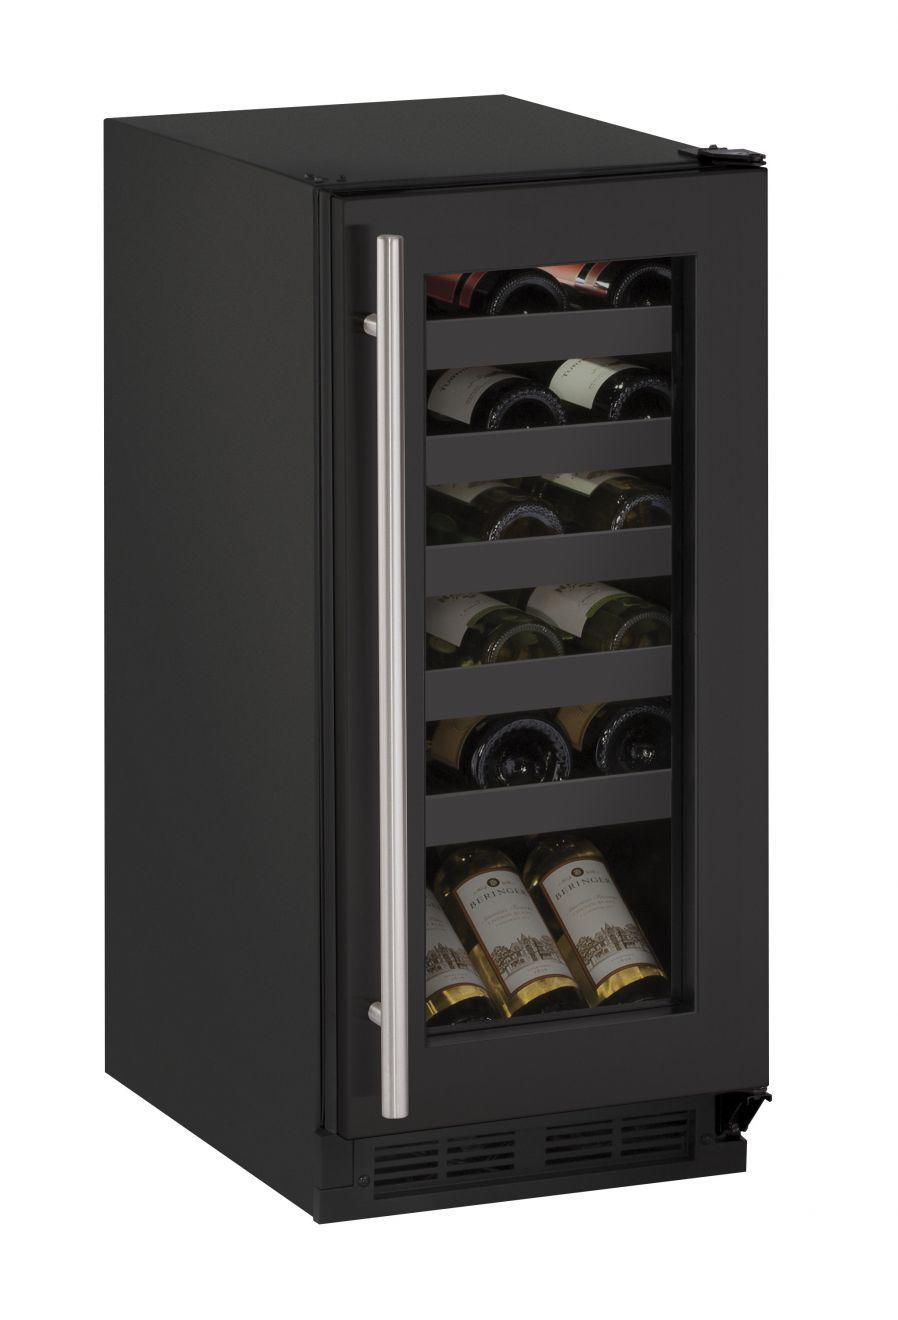 U-Line 1215wc 15" Wine Refrigerator With Black Frame Finish (115 V/60 Hz Volts /60 Hz Hz)